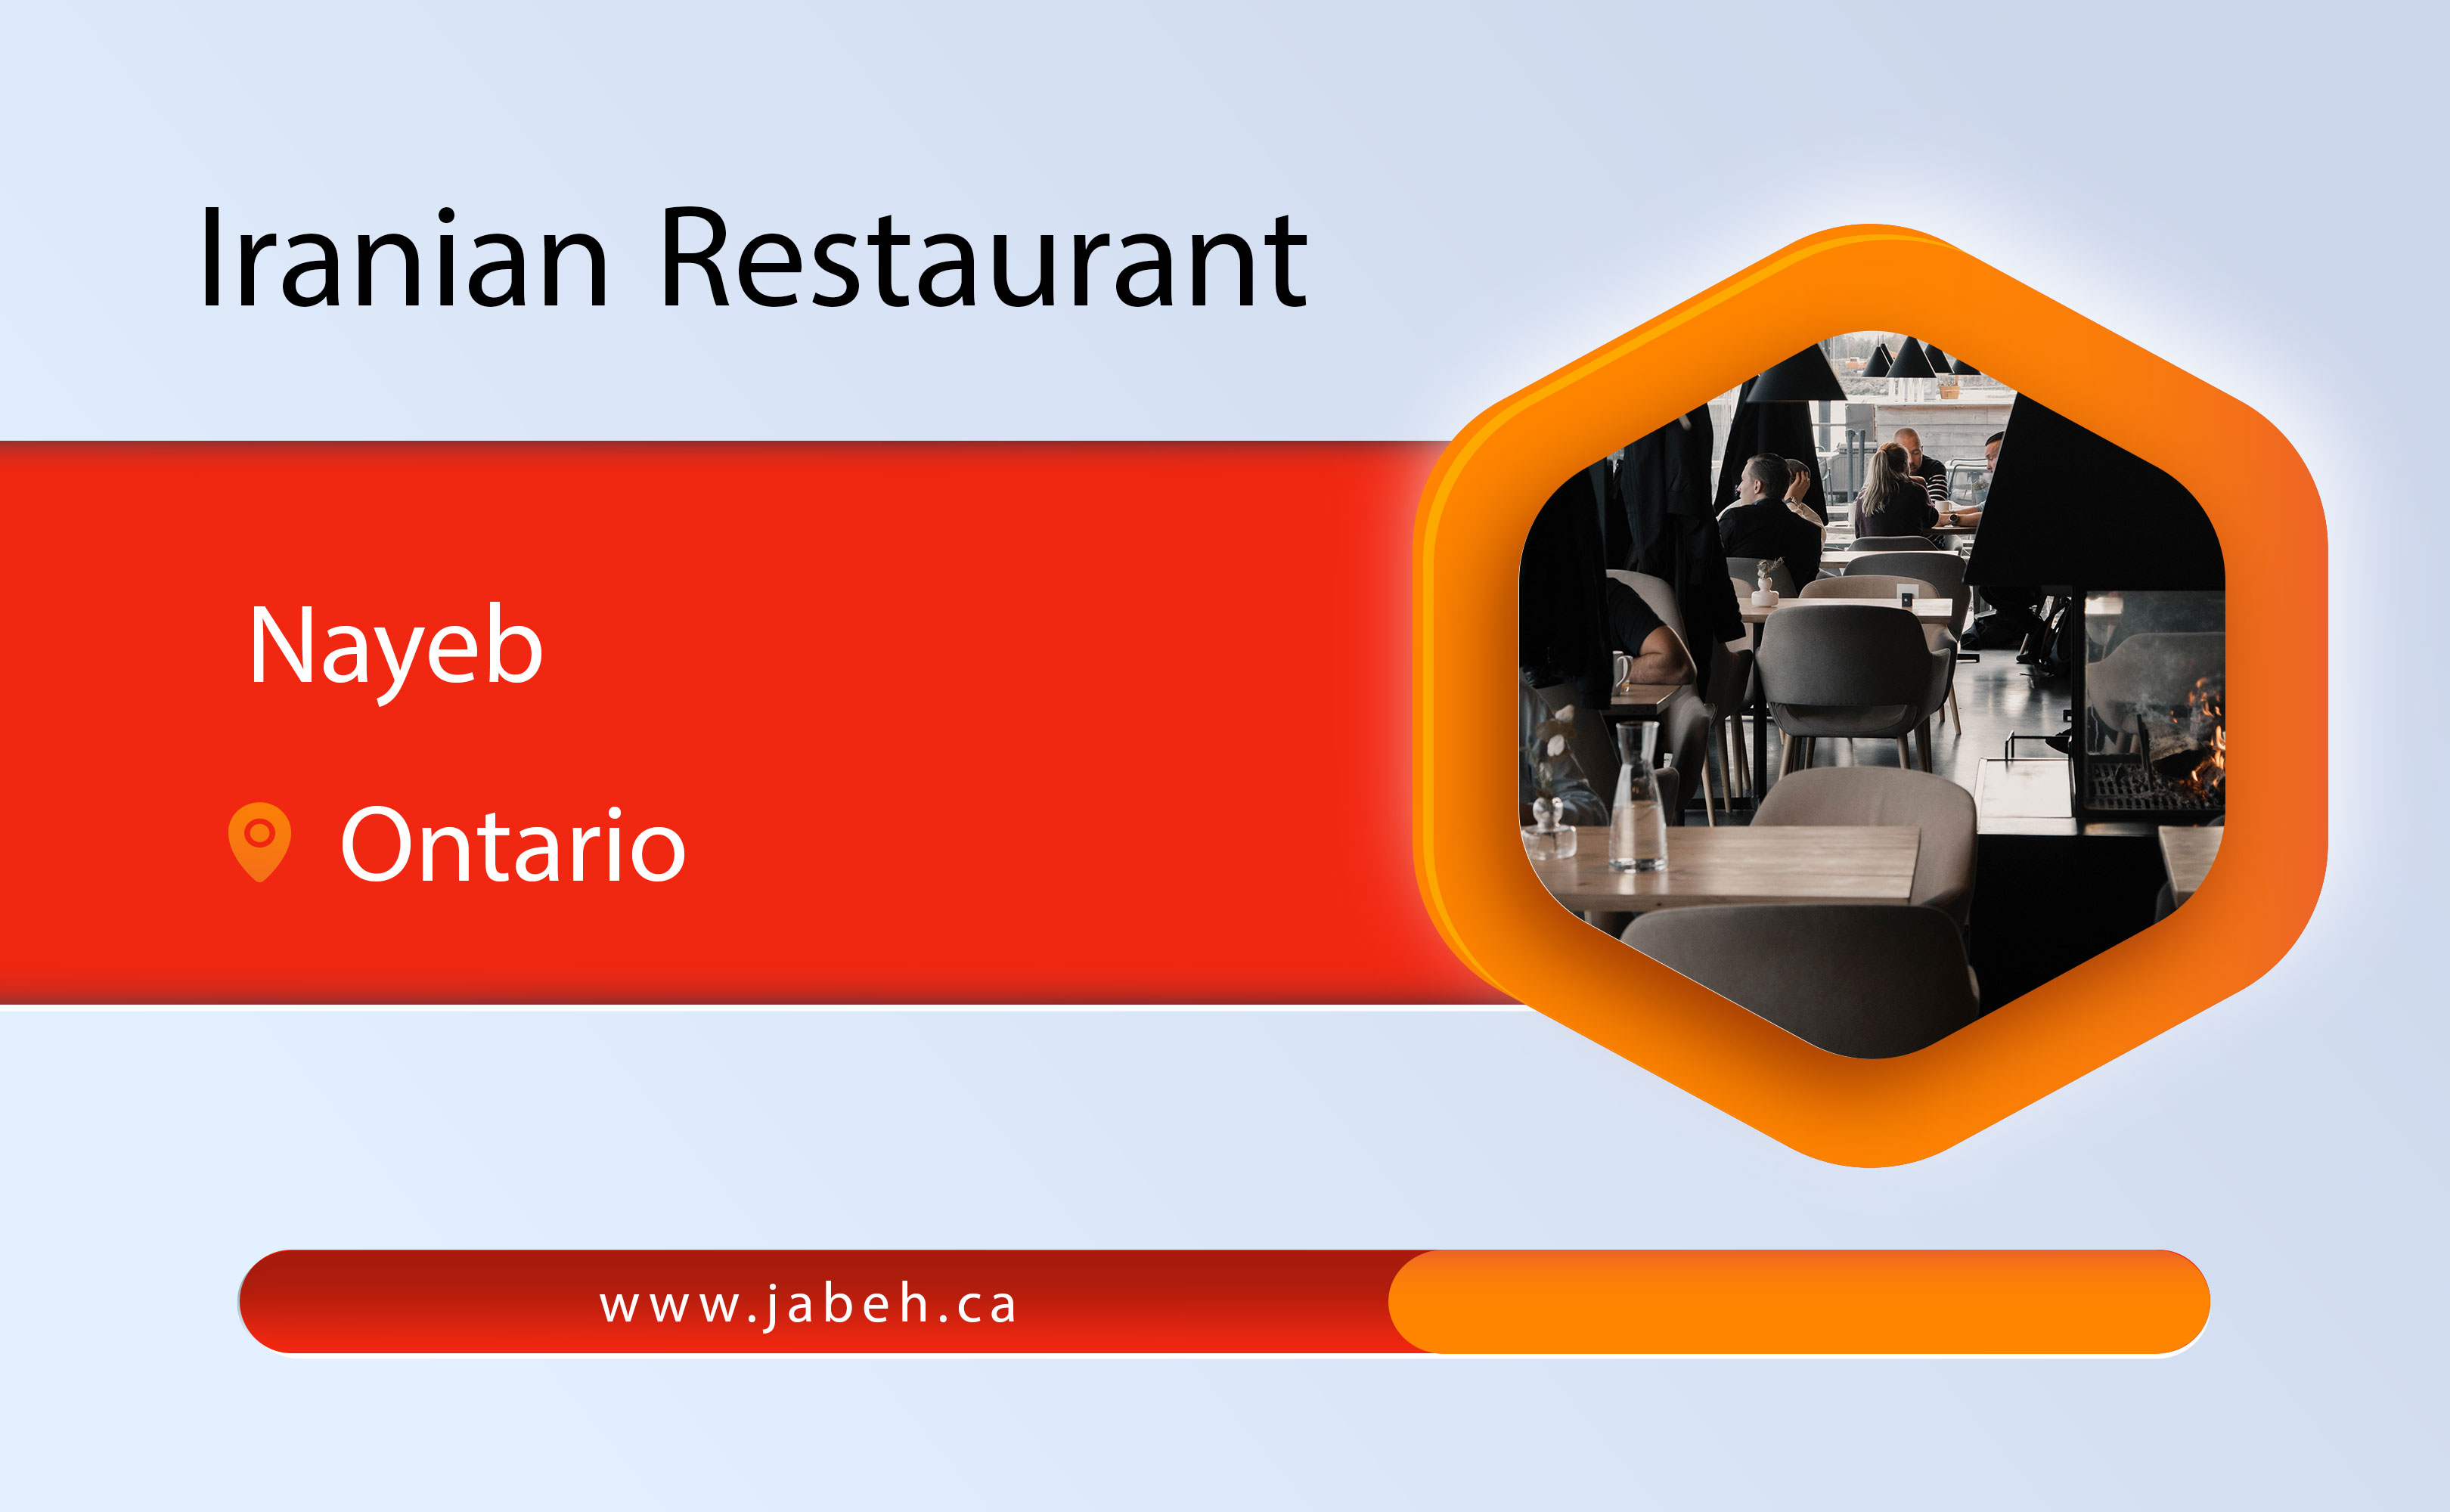 Naib Iranian restaurant in Ontario